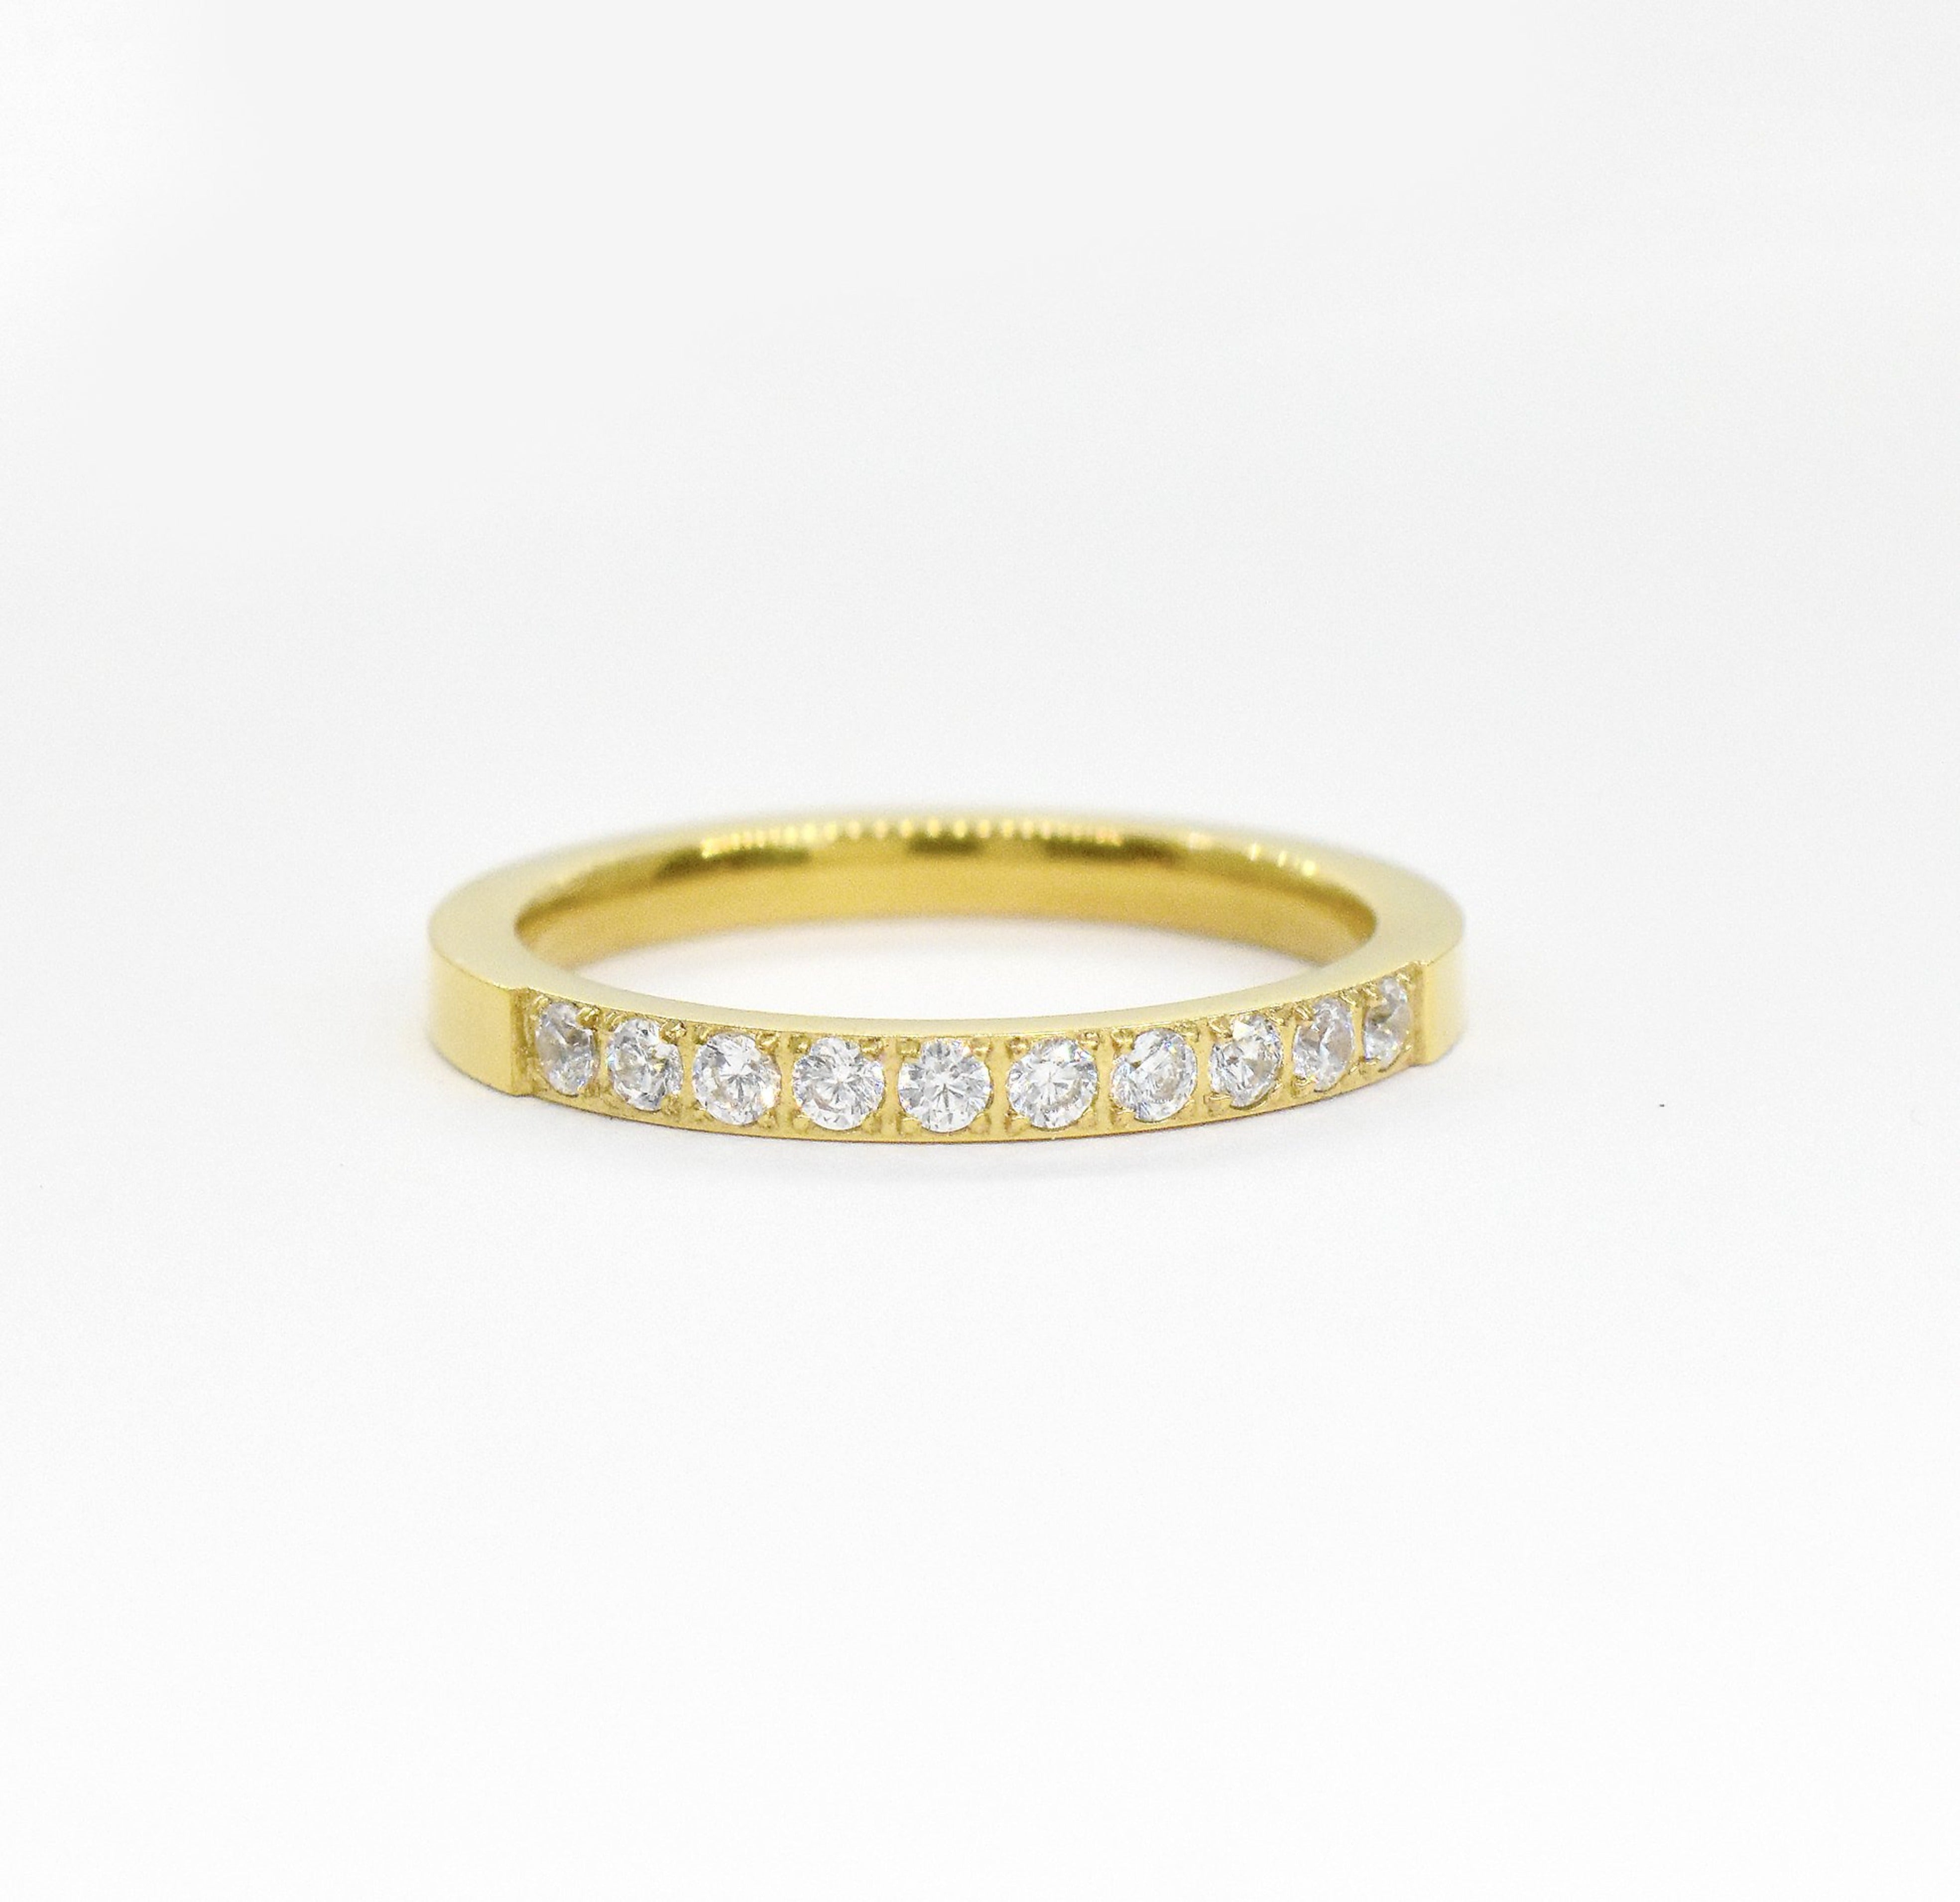 Stella gold hald eternity ring band waterproof jewelry